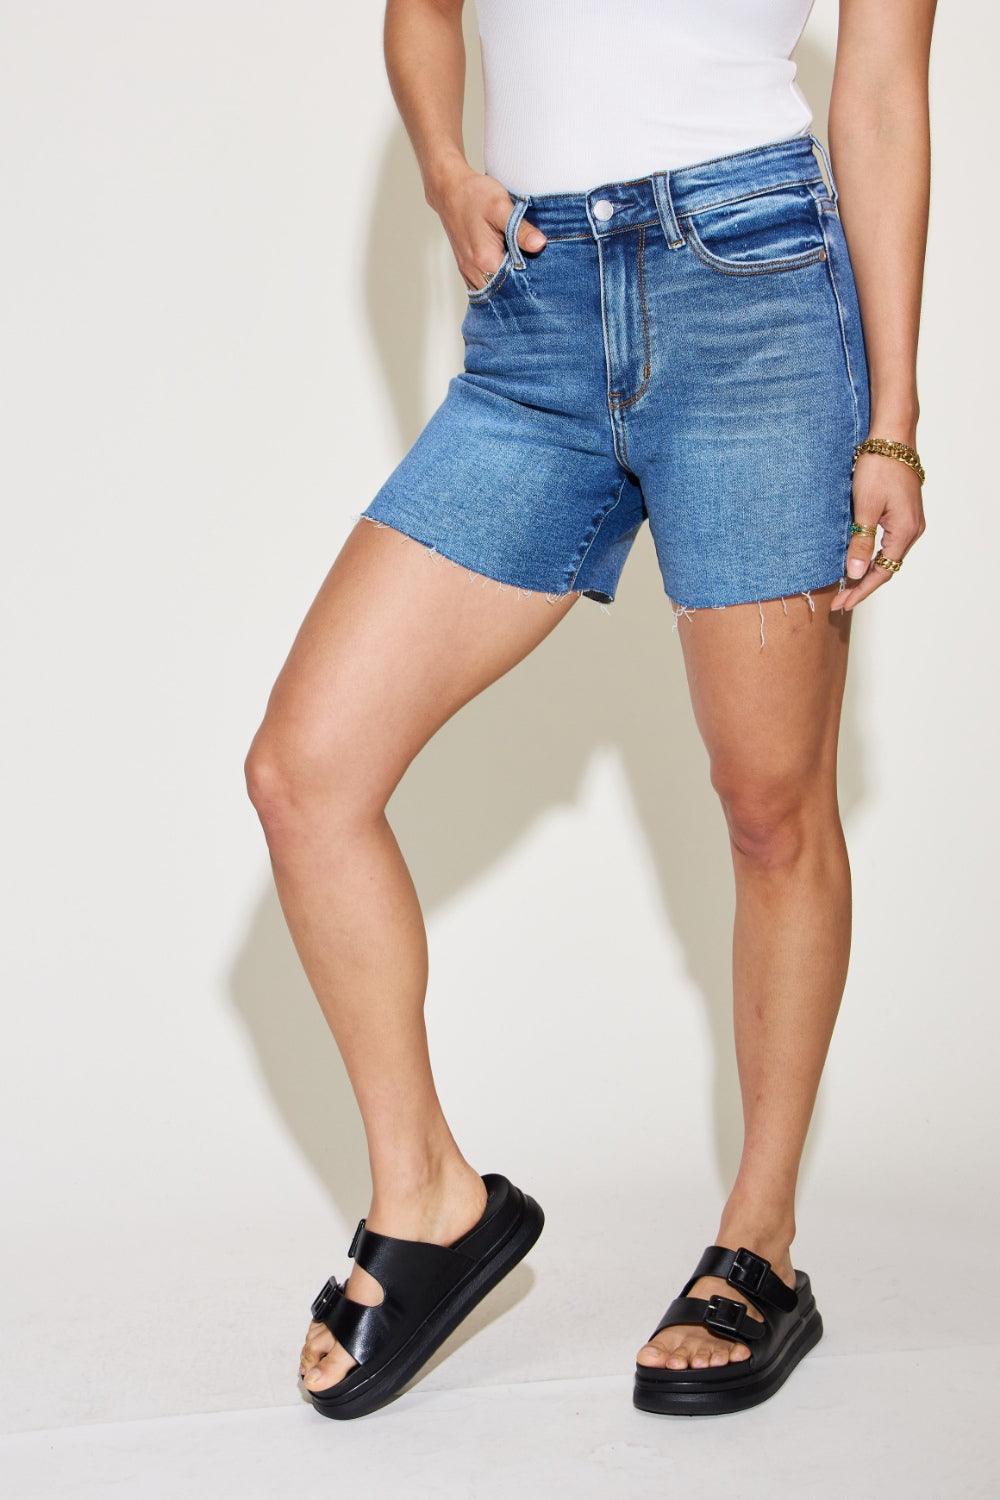 Judy Blue Full Size High Waist Slim Denim Shorts - Anchored Feather Boutique